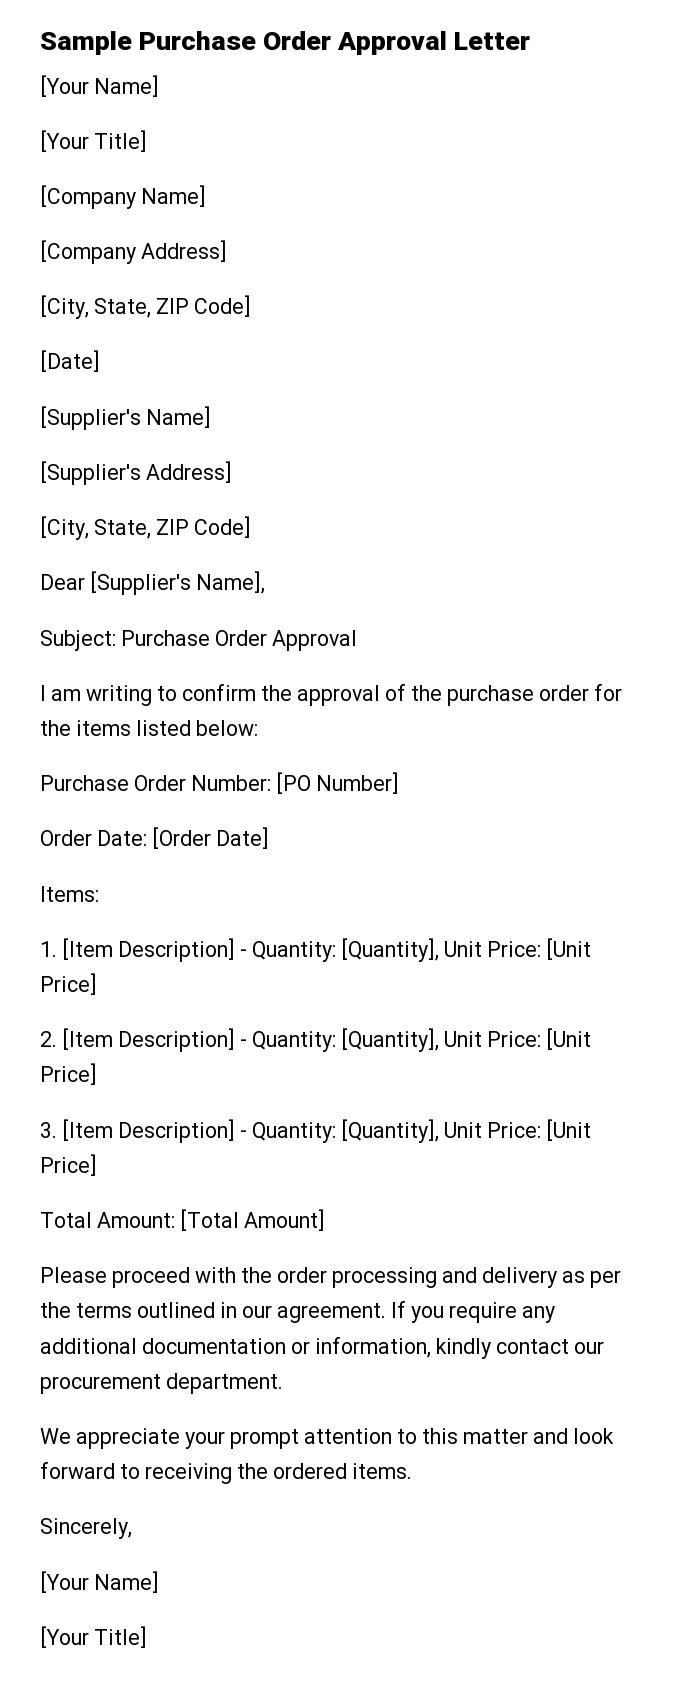 Sample Purchase Order Approval Letter